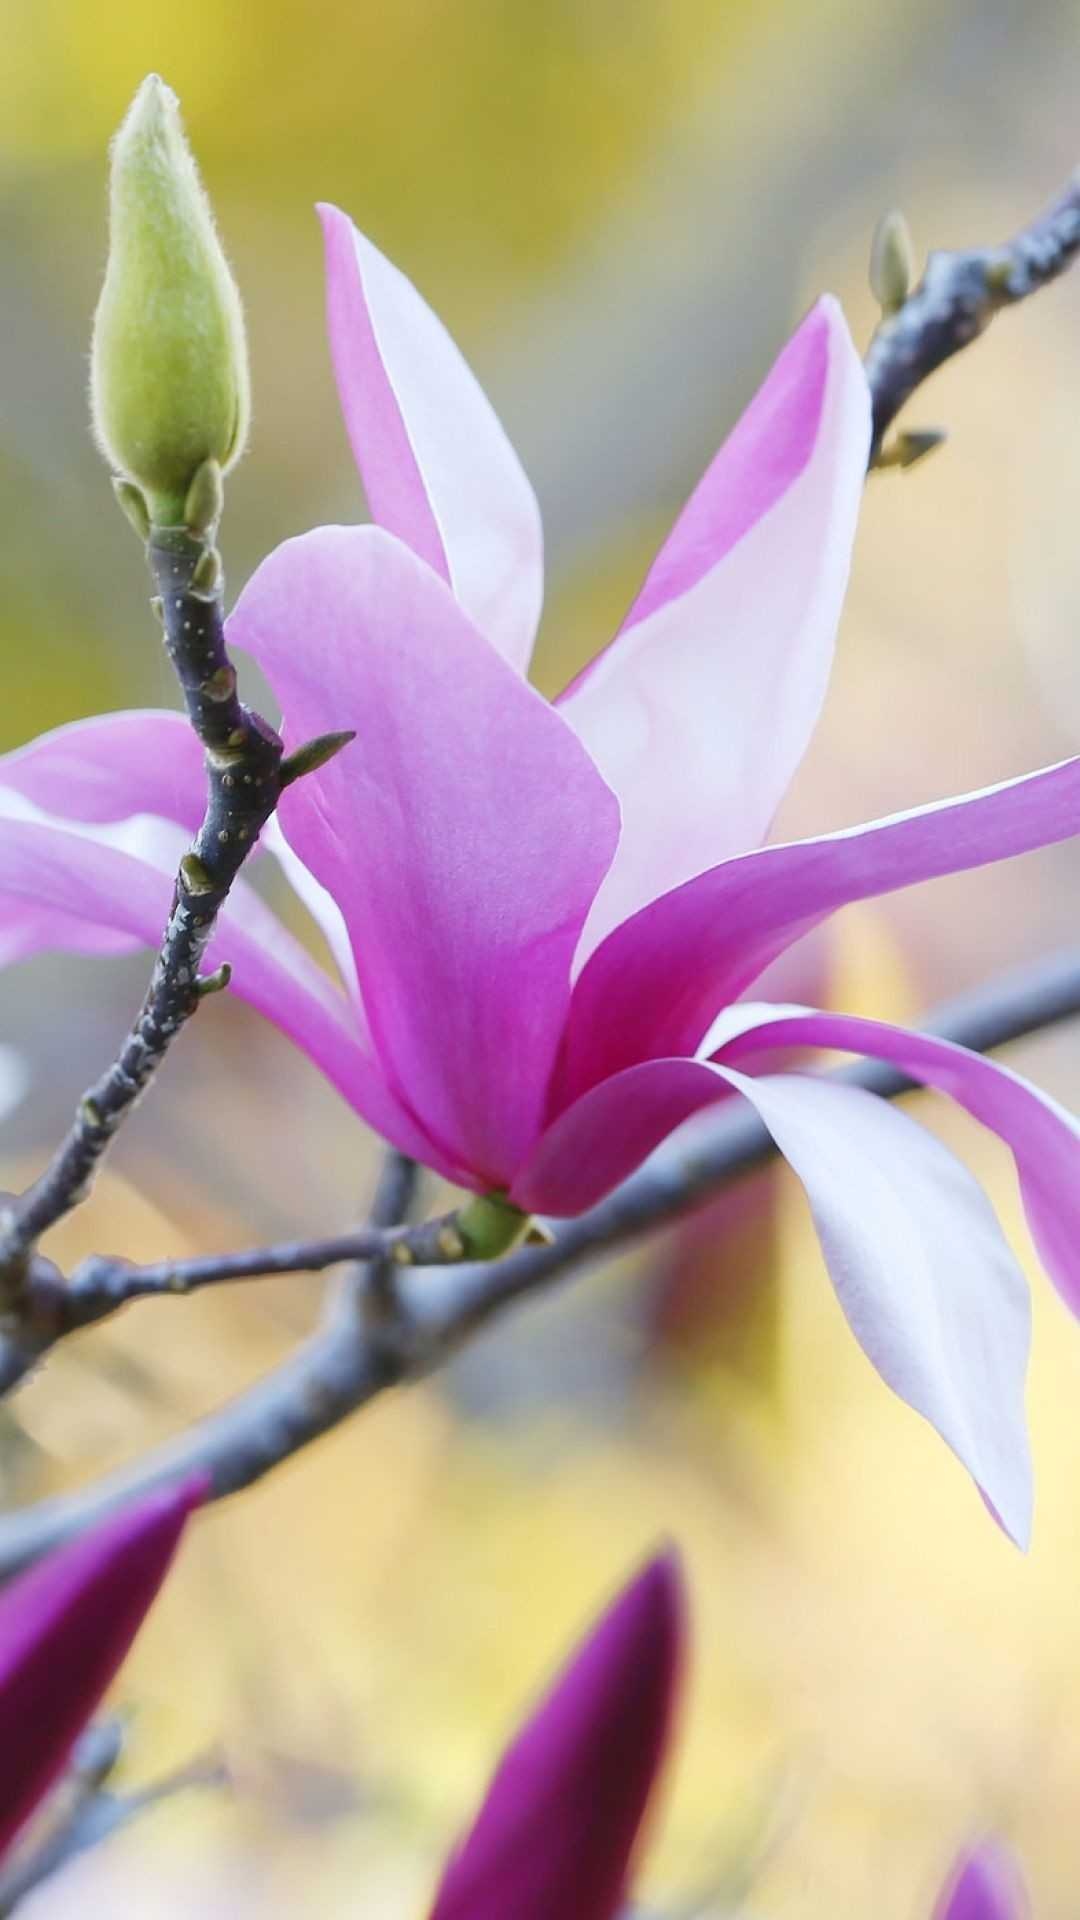 Captivating magnolia, Stunning wallpaper, Nature's delight, Magnolia's elegance, 1080x1920 Full HD Handy